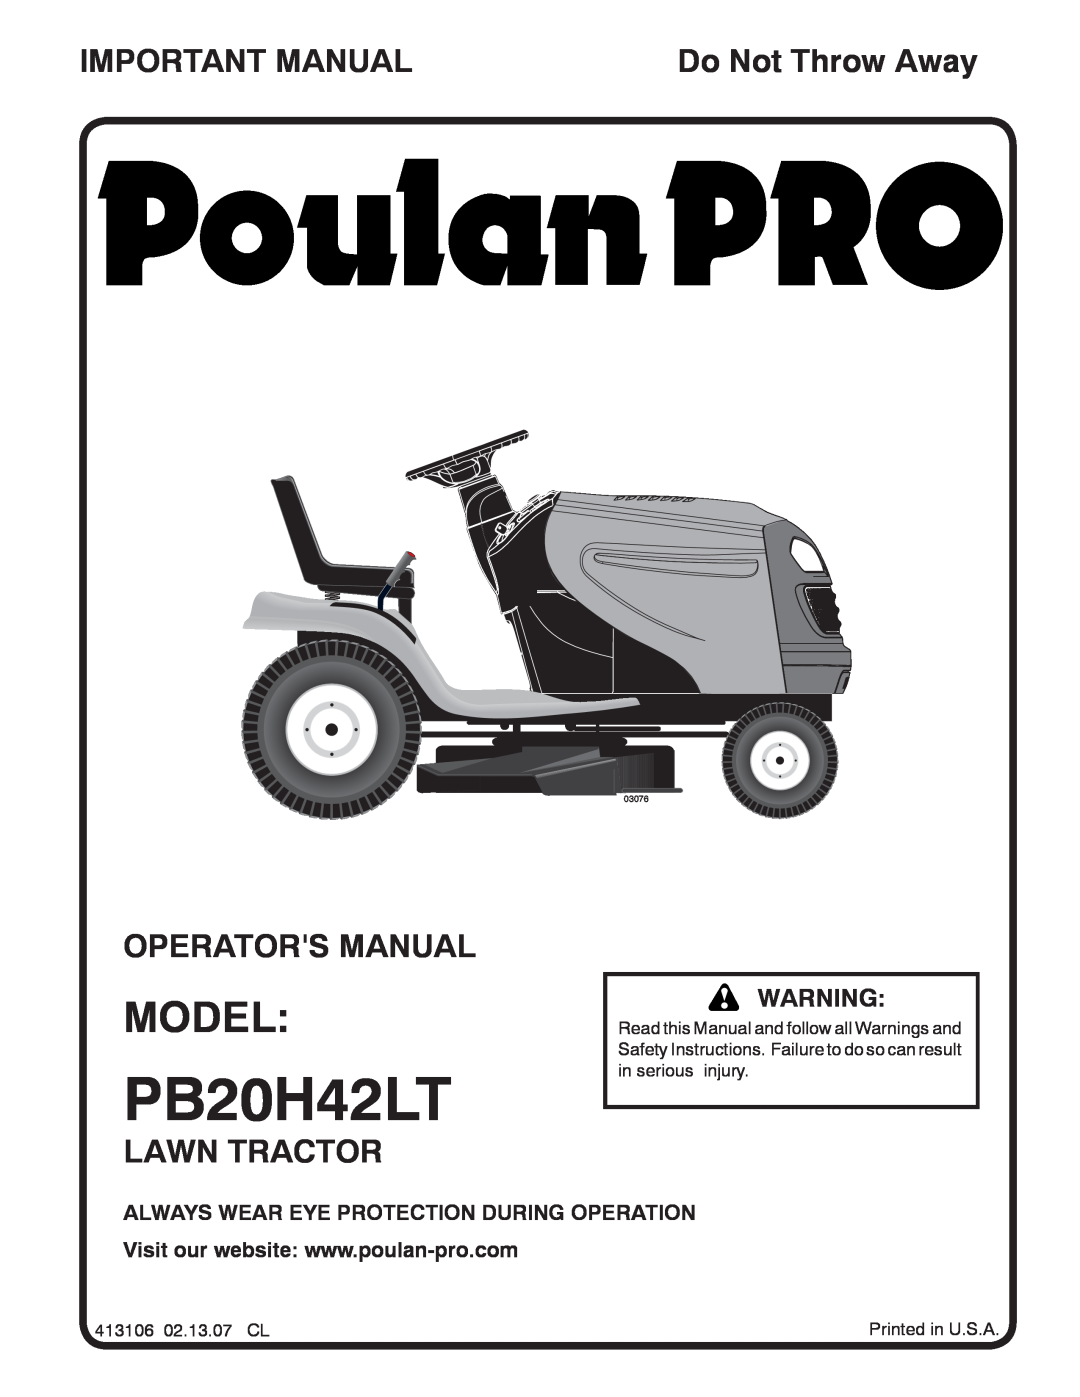 Poulan PB20H42LT manual Model, Important Manual, Operators Manual, Lawn Tractor, Do Not Throw Away, 03076 